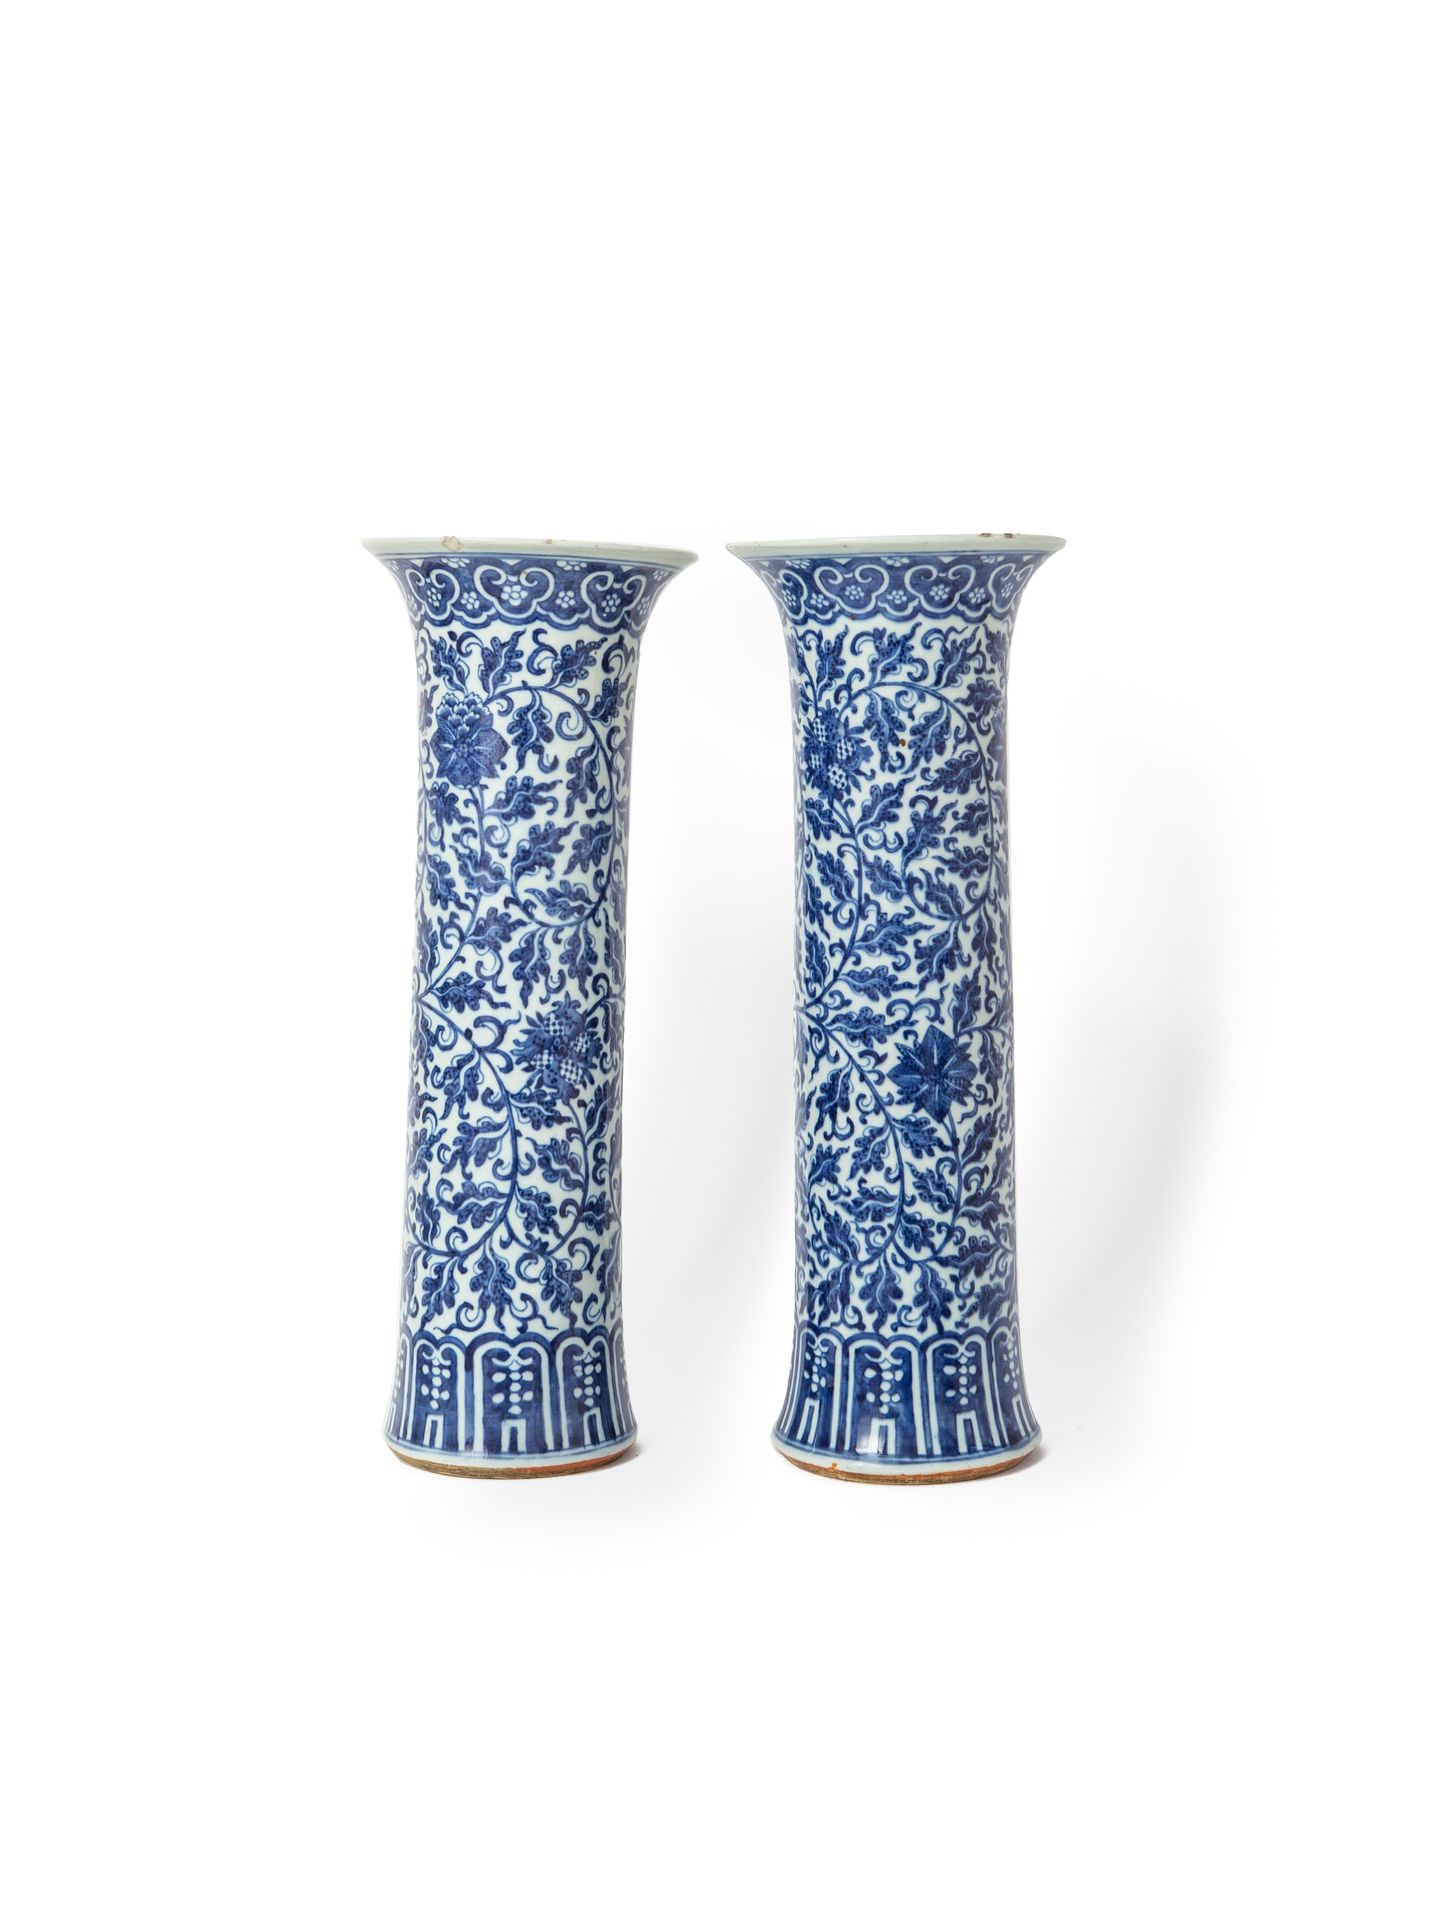 Null 中国，19世纪

一对 "烧杯 "形式的瓷瓶，带有青花卷轴、叶子和牡丹花的装饰，颈部有如意纹，这种类型的花瓶通常是由三个类似风格的有盖花盆组成的大套装&hellip;